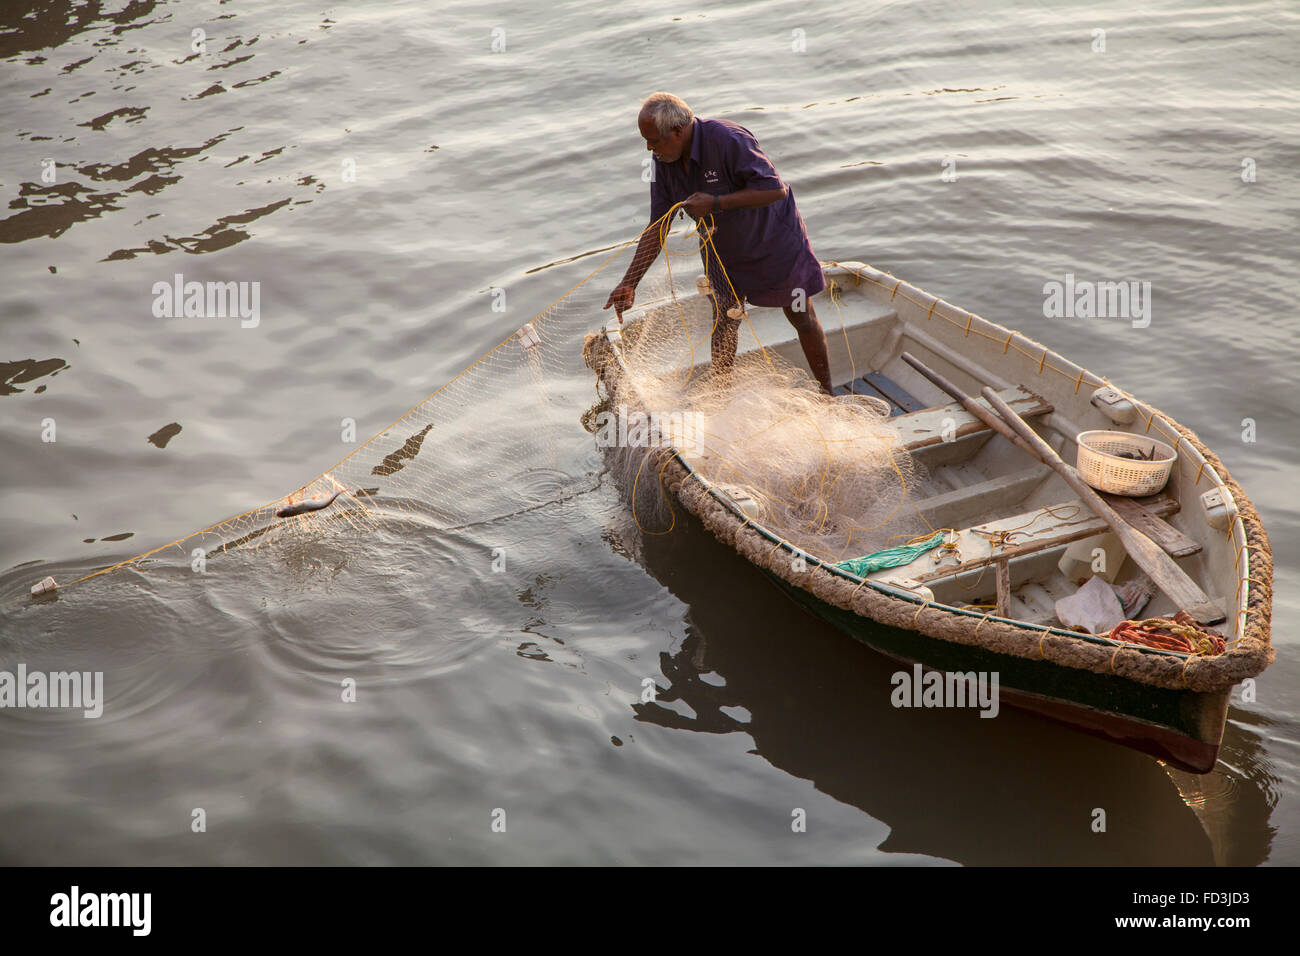 Fisherman pulling in his net in Mumbai (Bombay) Harbour. Stock Photo